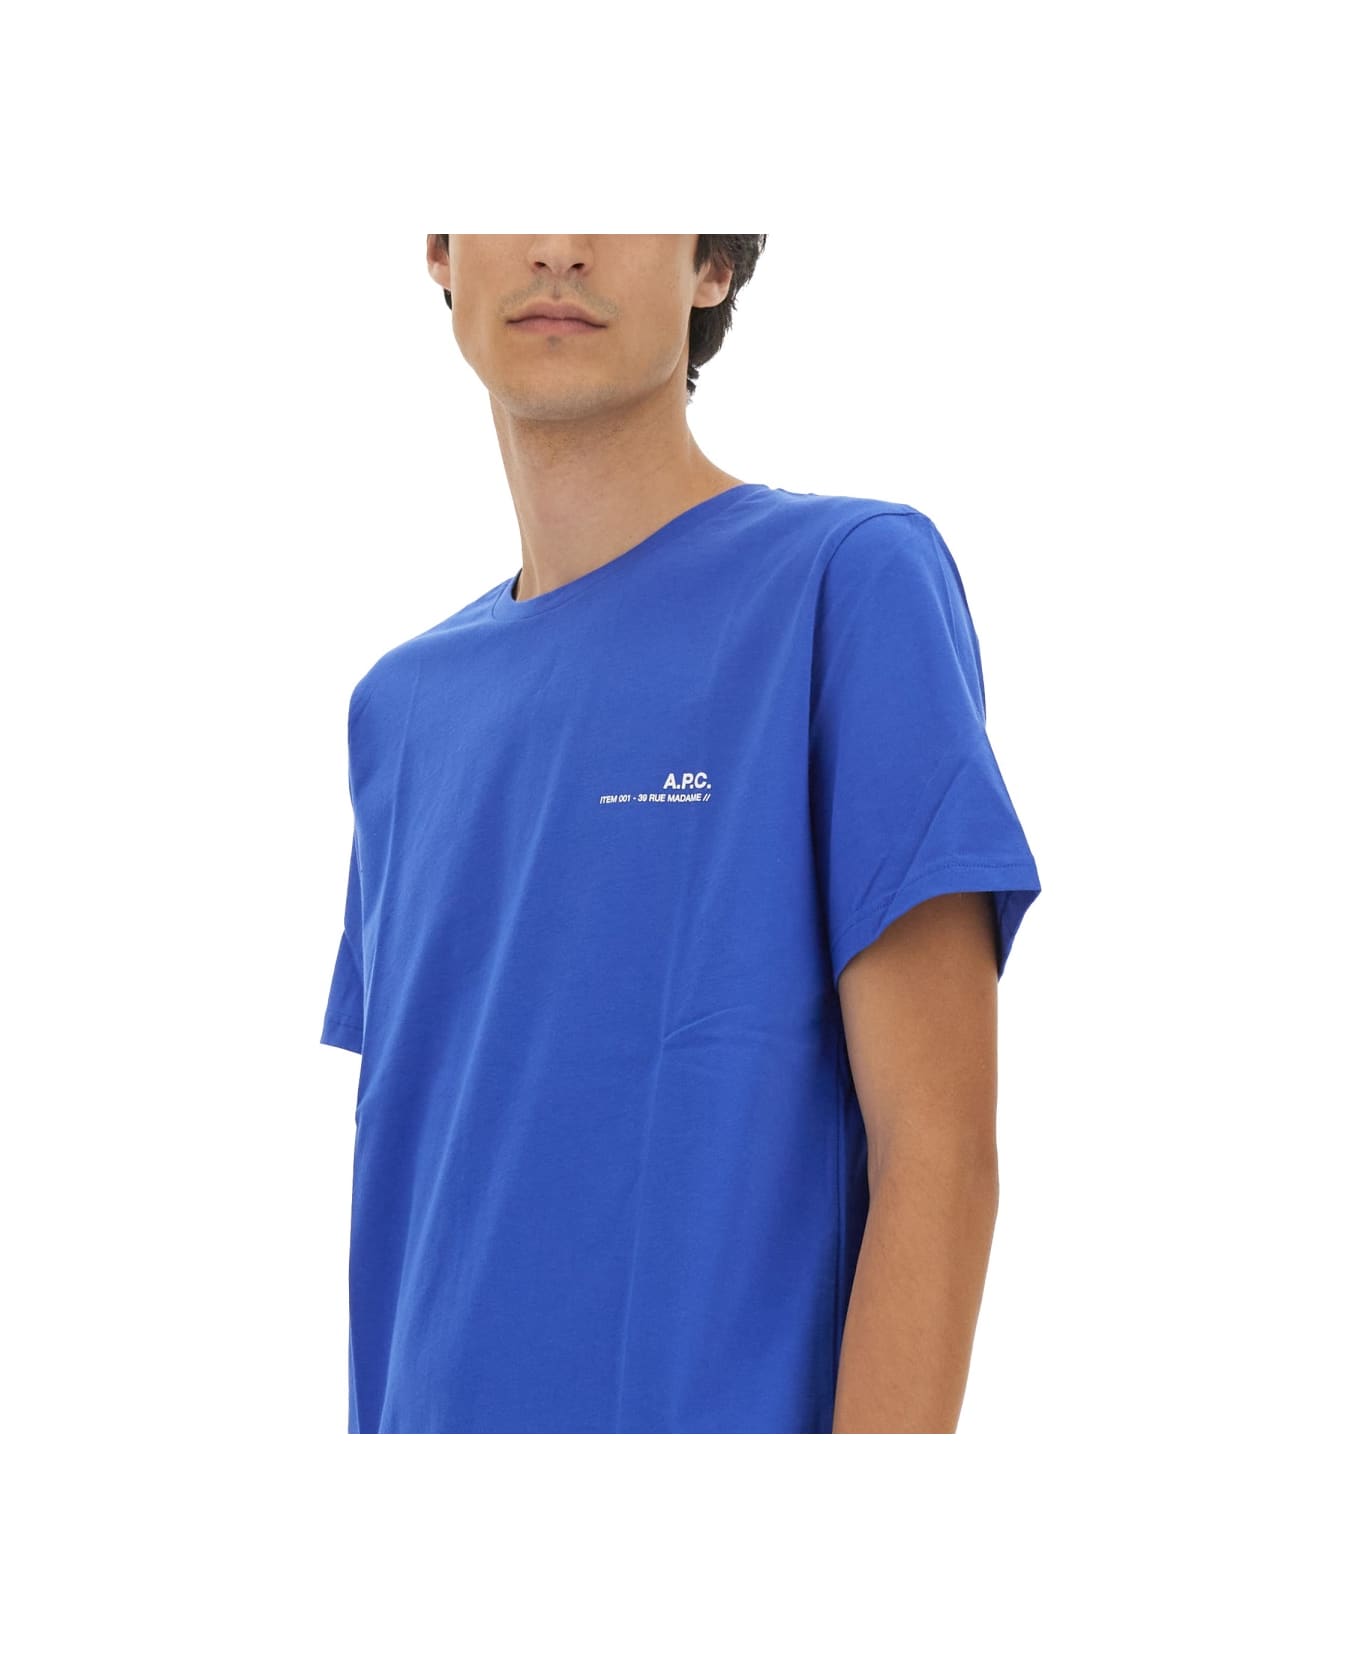 A.P.C. Logo Print T-shirt - BLUE